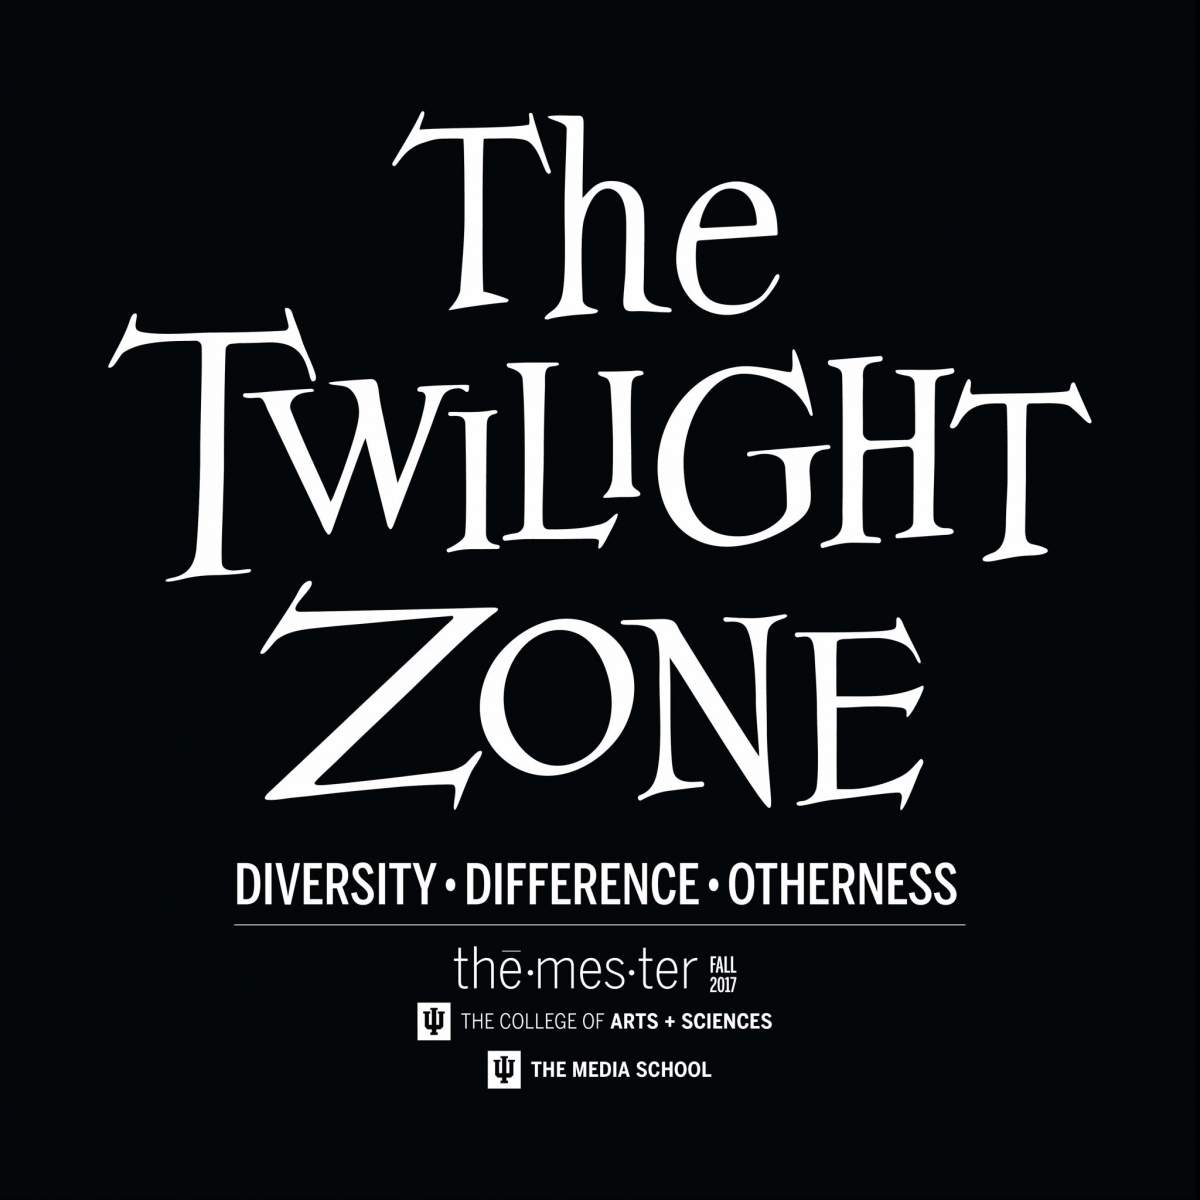 IU Twilight Zone Project